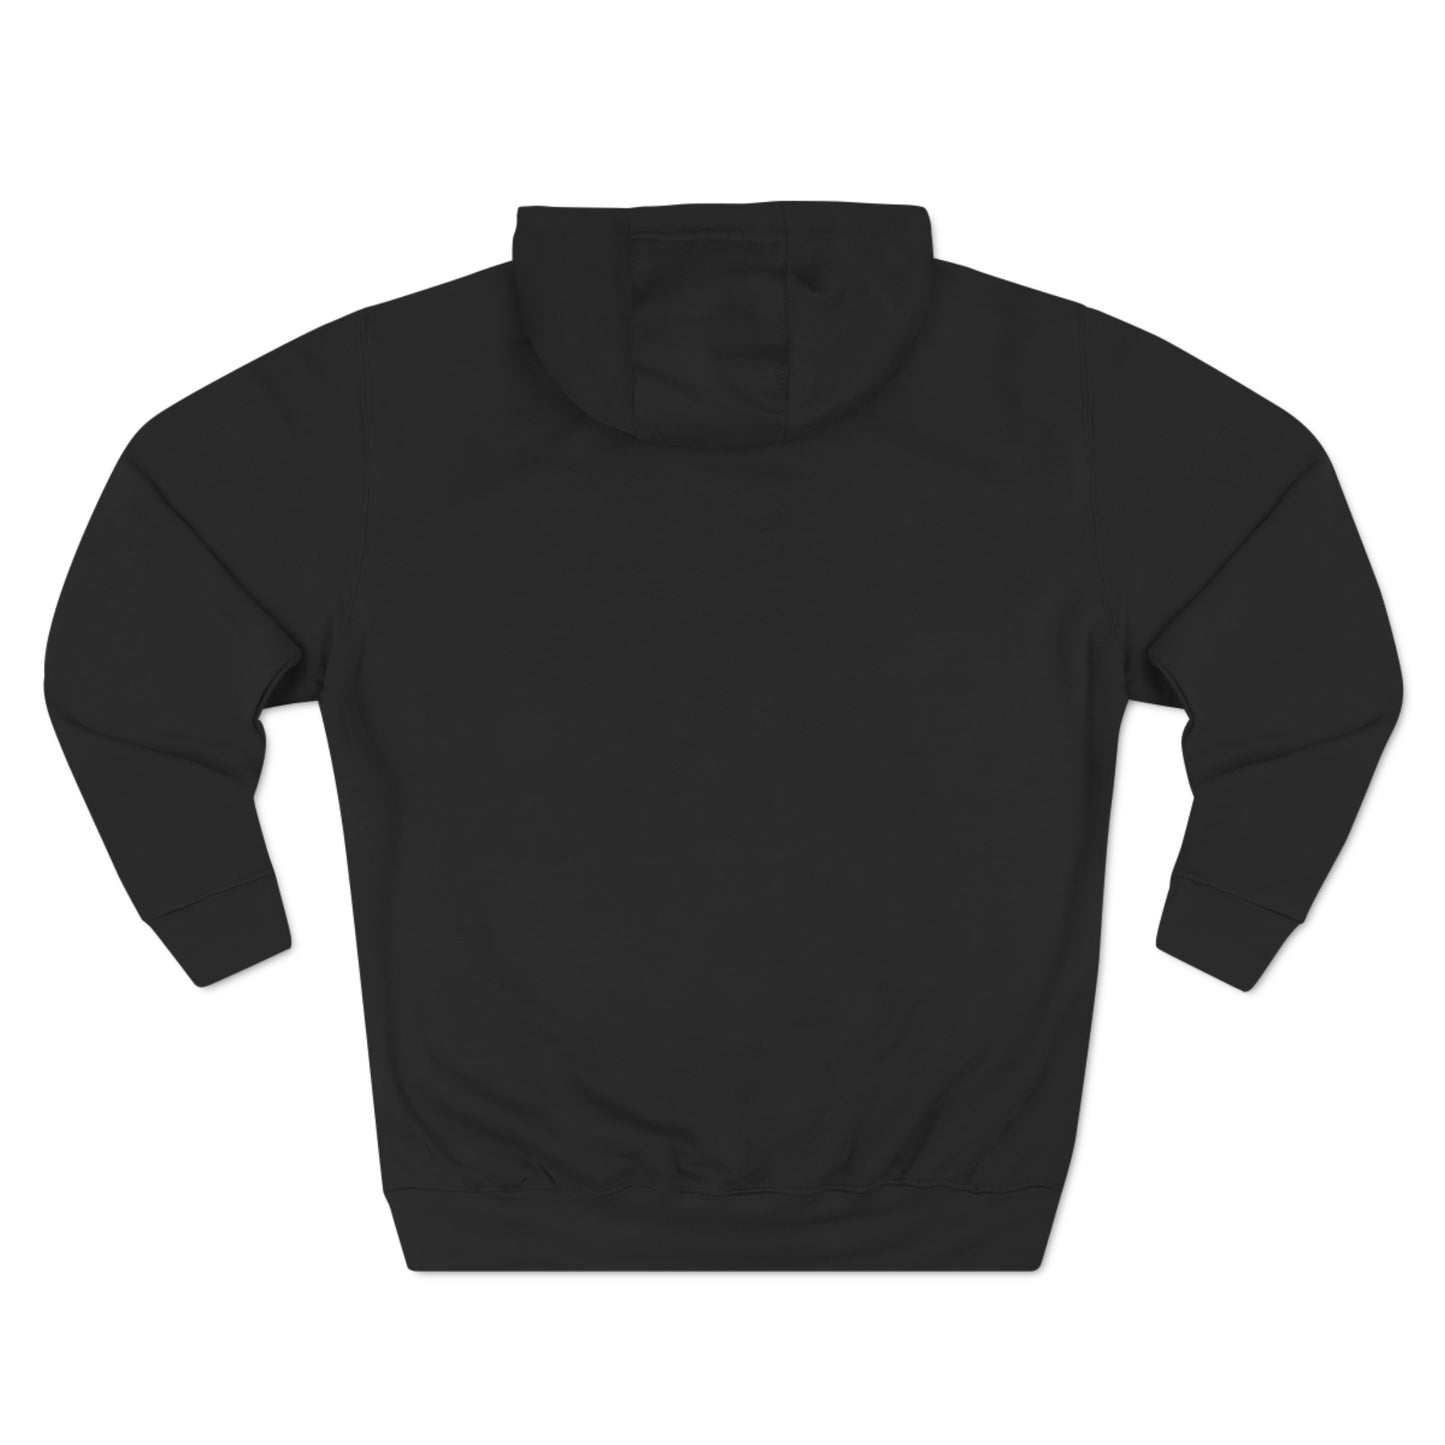 Drew Blake Unisex Premium Sweatshirt